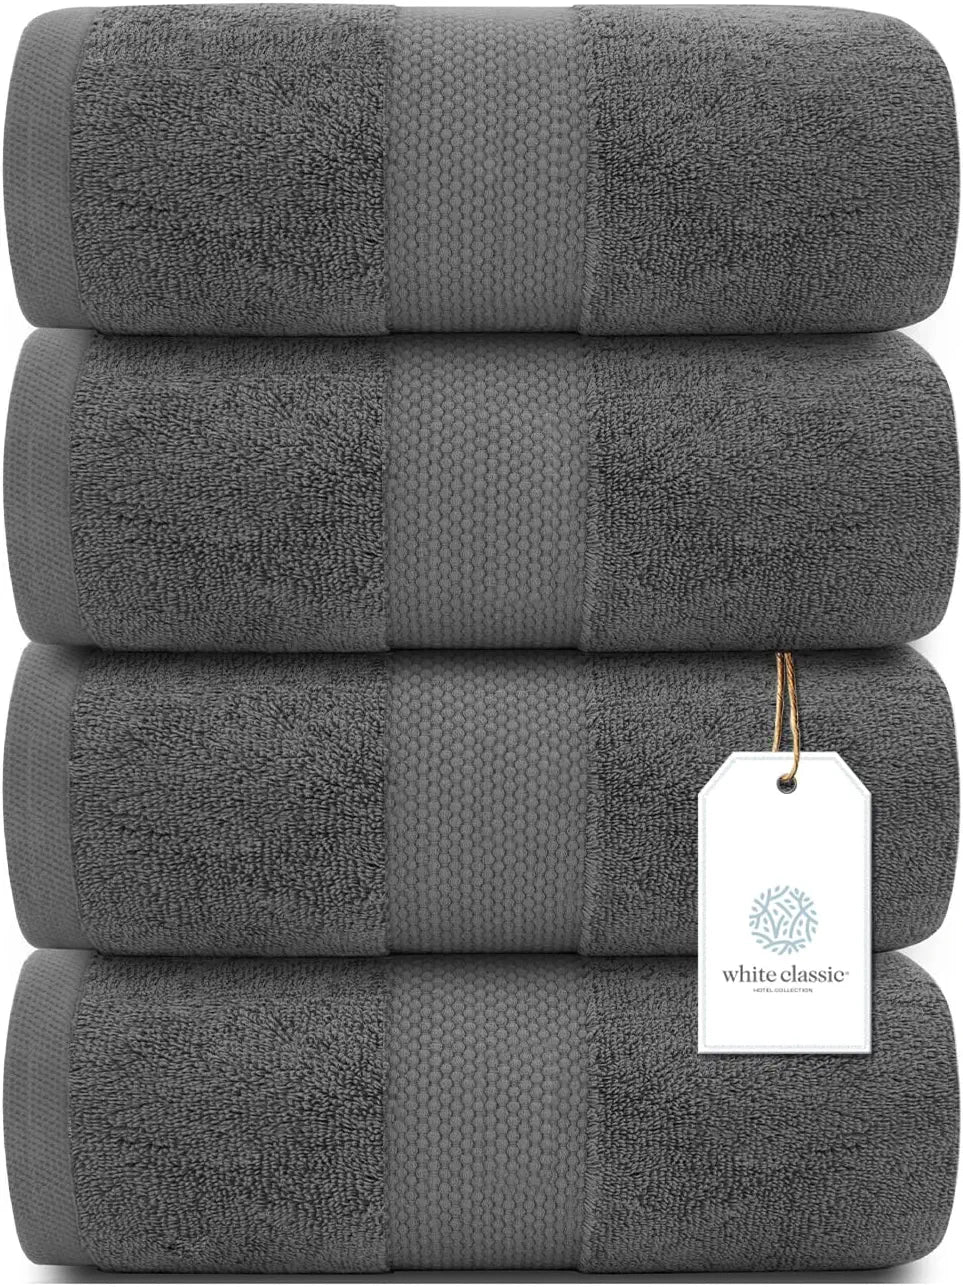 Spa Collection Gray Bath Towel